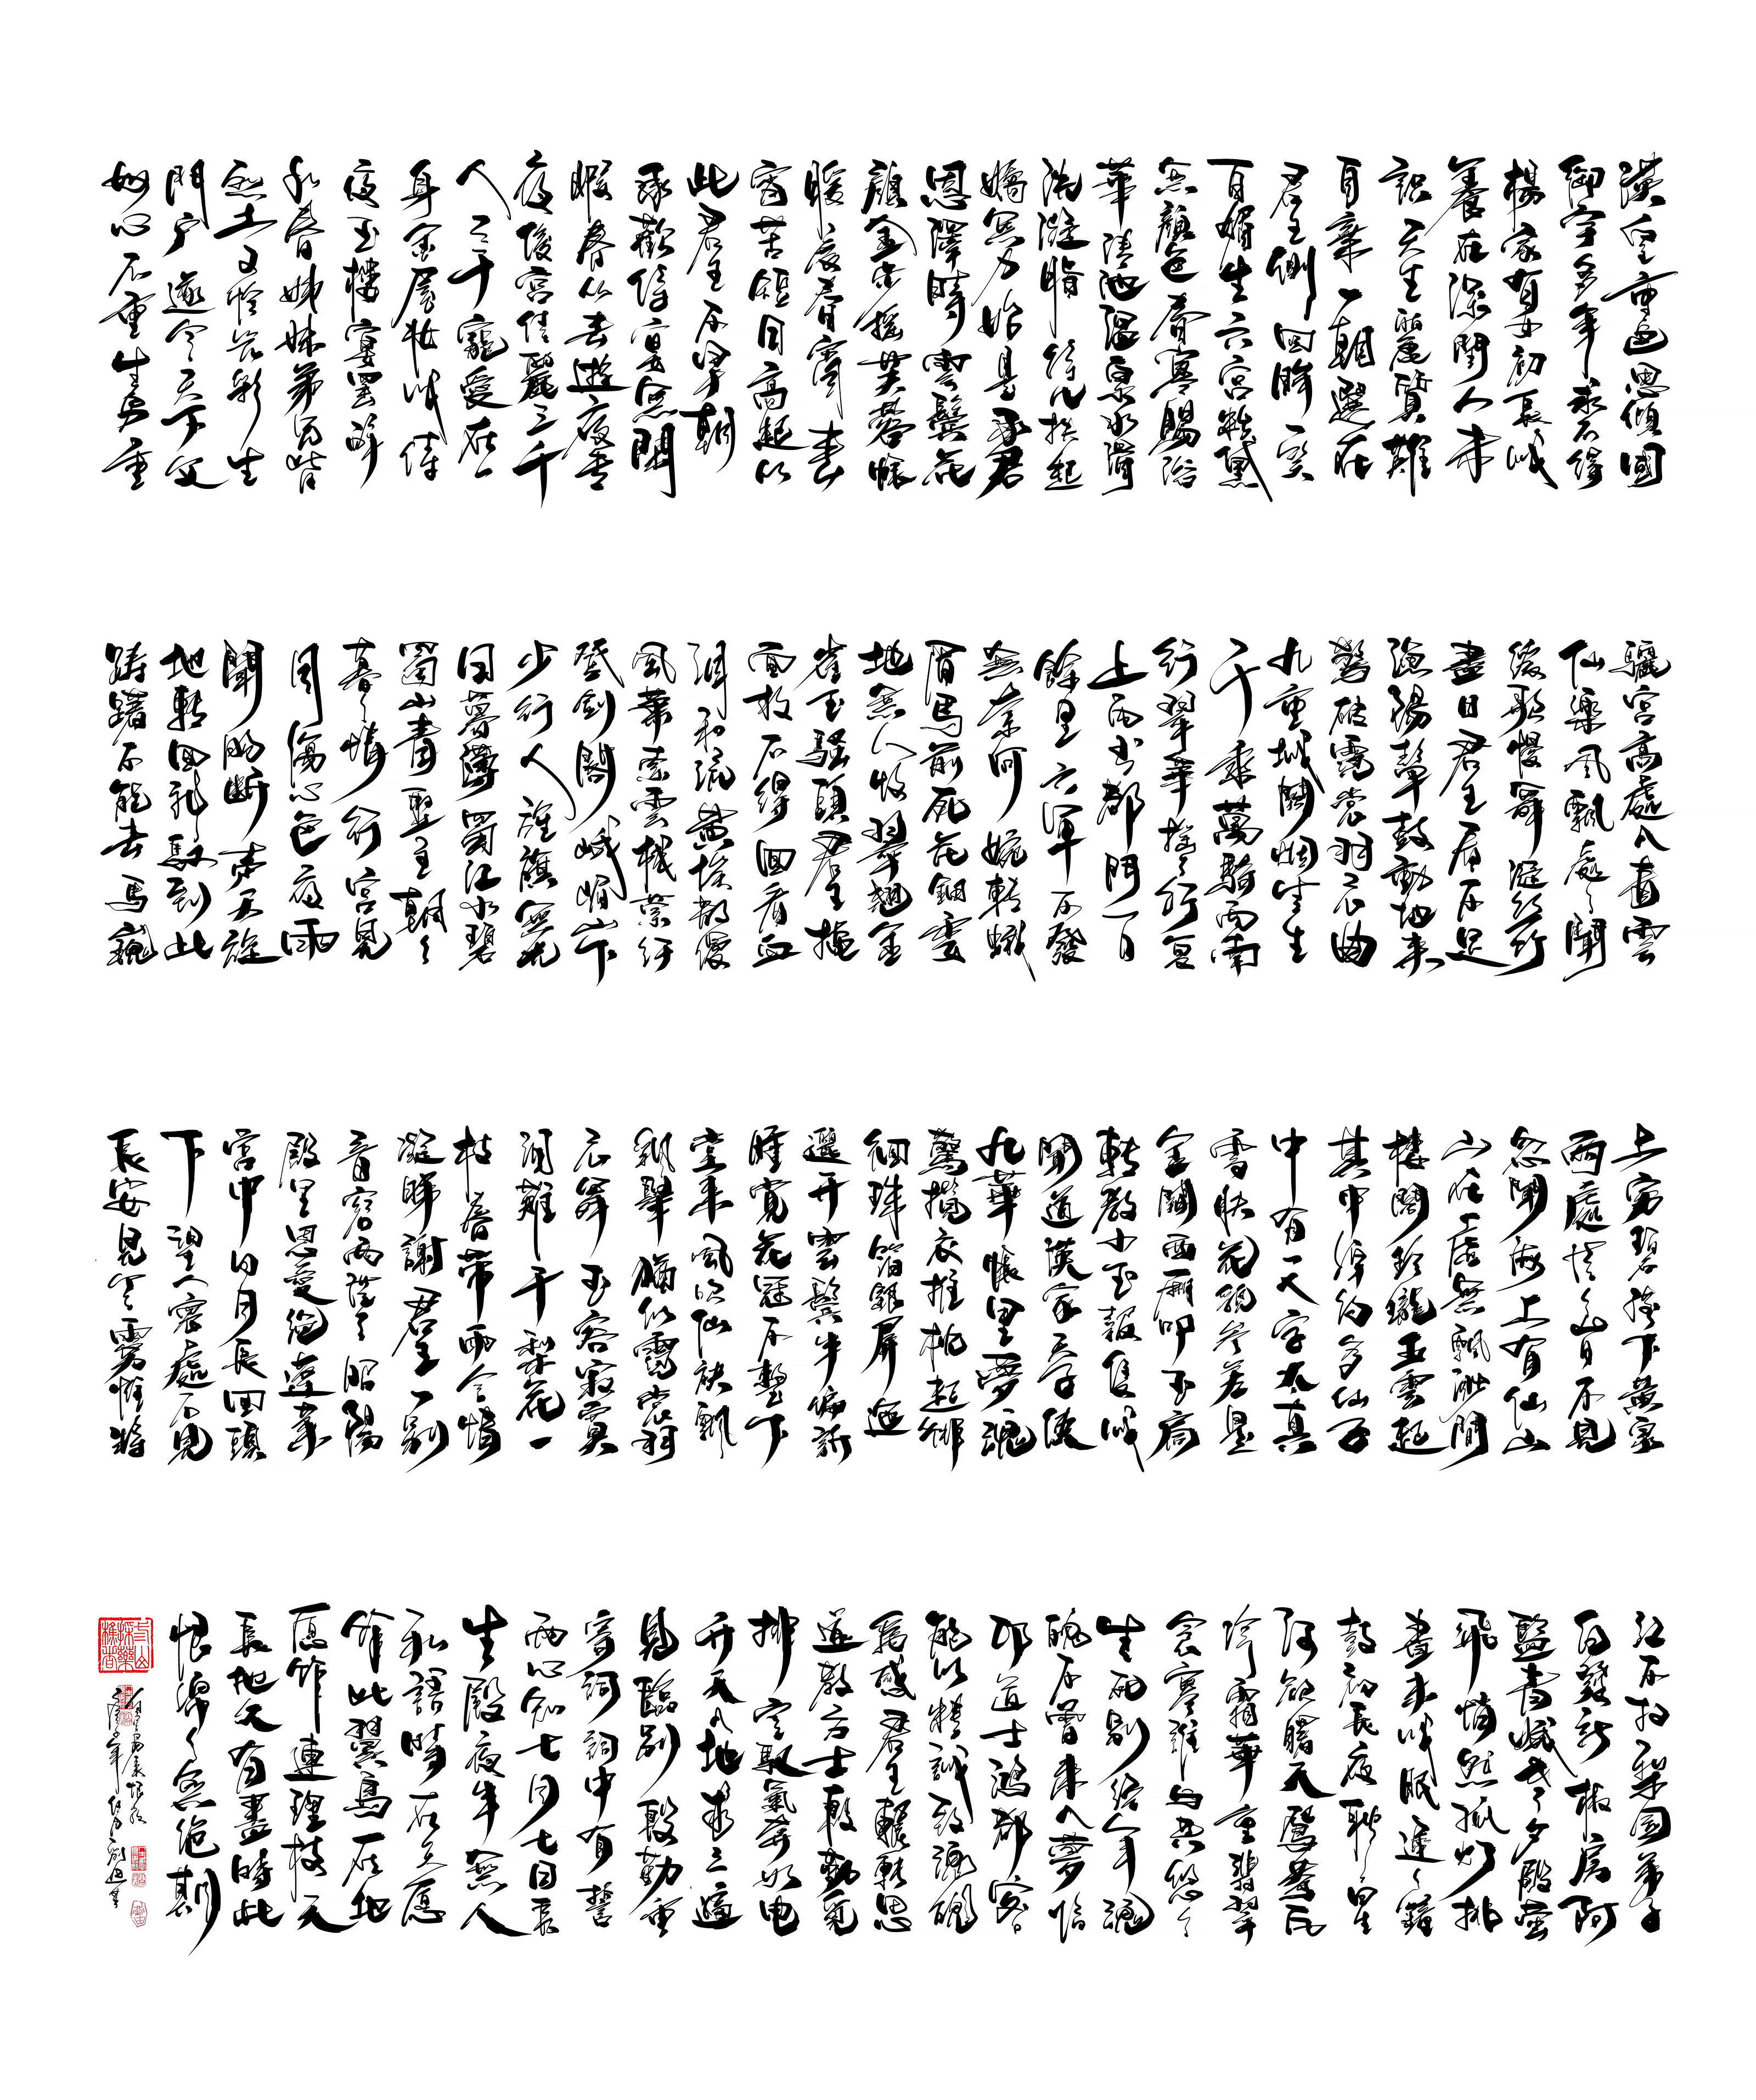 Interesting Chinese Creative Handwritten Font Design- Long Regret